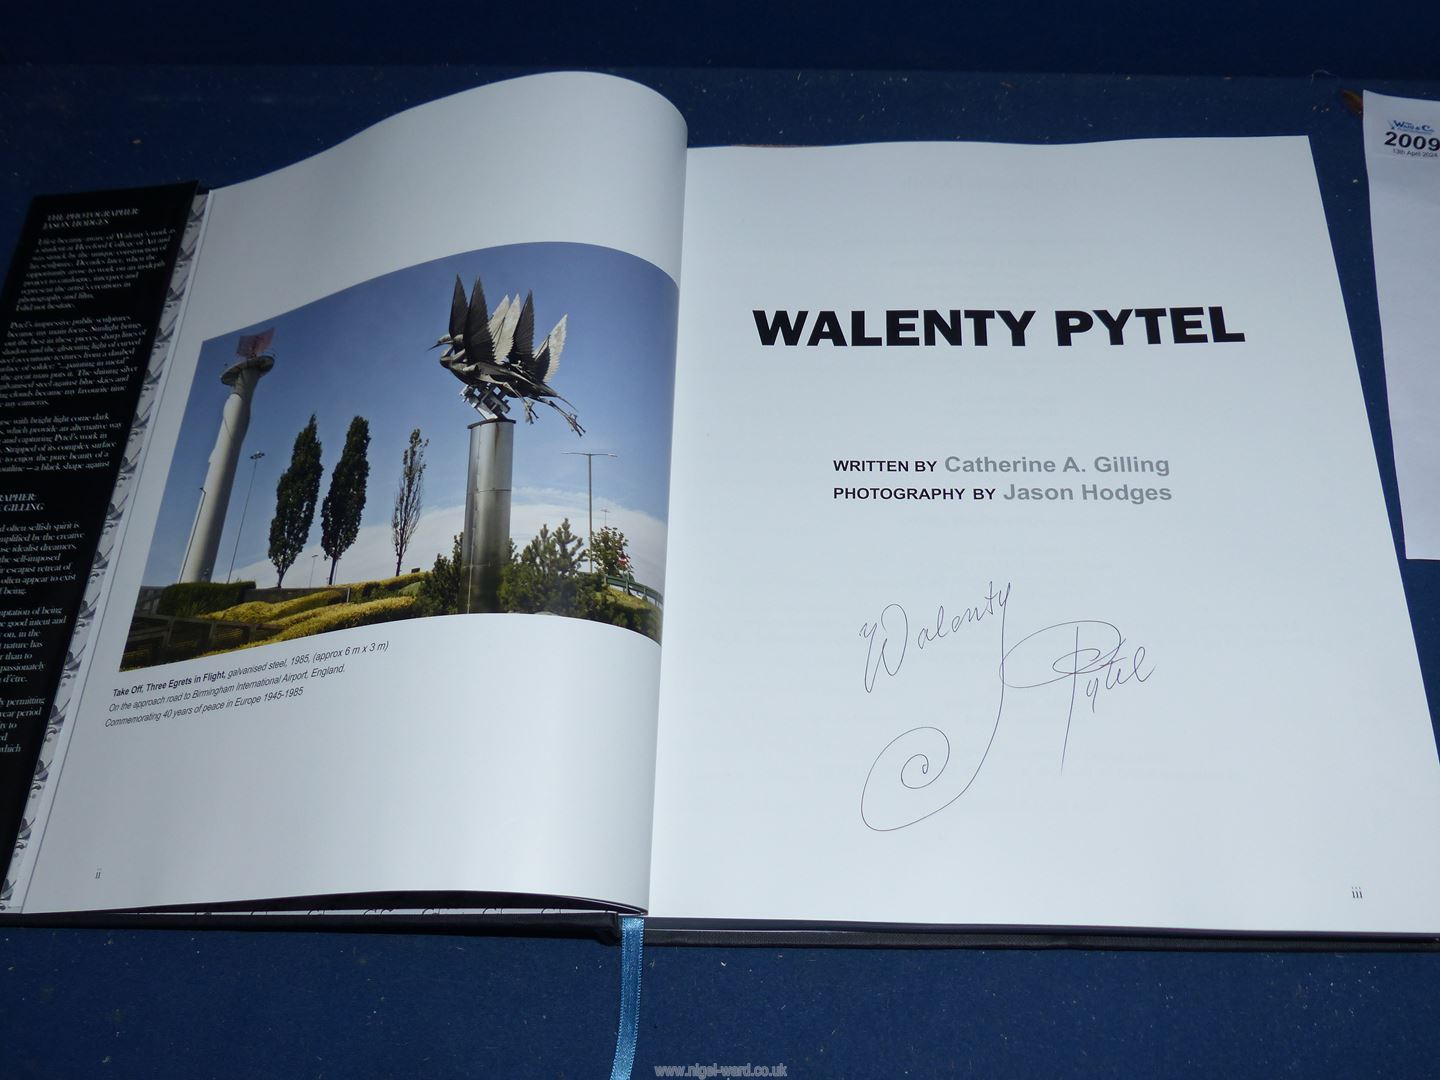 A first edition 'Walenty Pytel, Life, Art, Sculpture' signed by Walenty Pytel. - Image 3 of 3